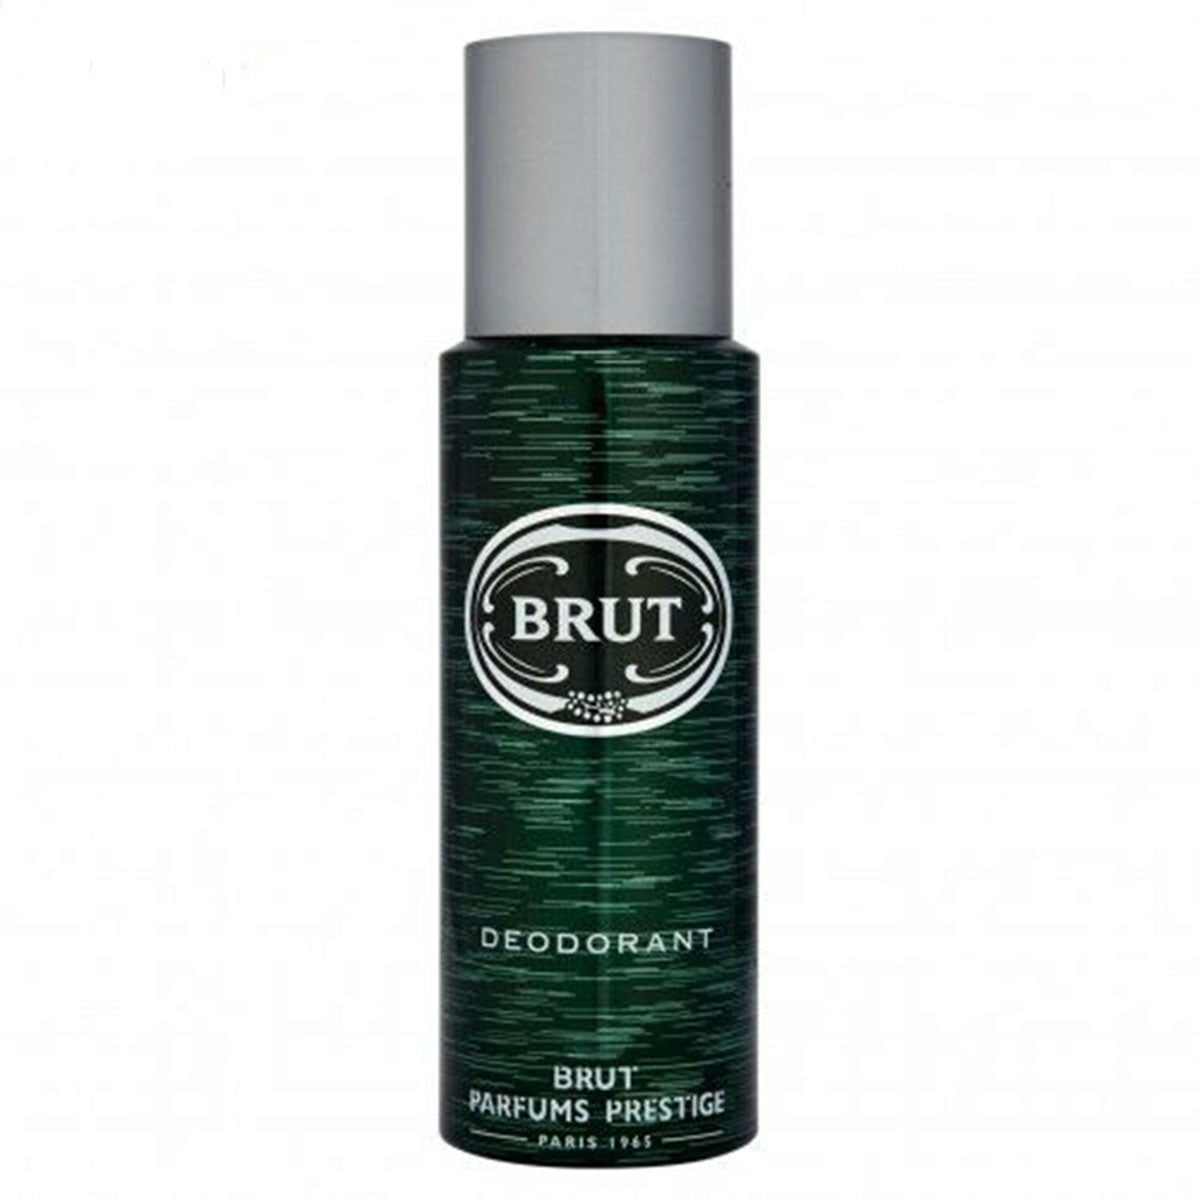 Brut - Original Deodorant Spray - 200ml - Continental Food Store